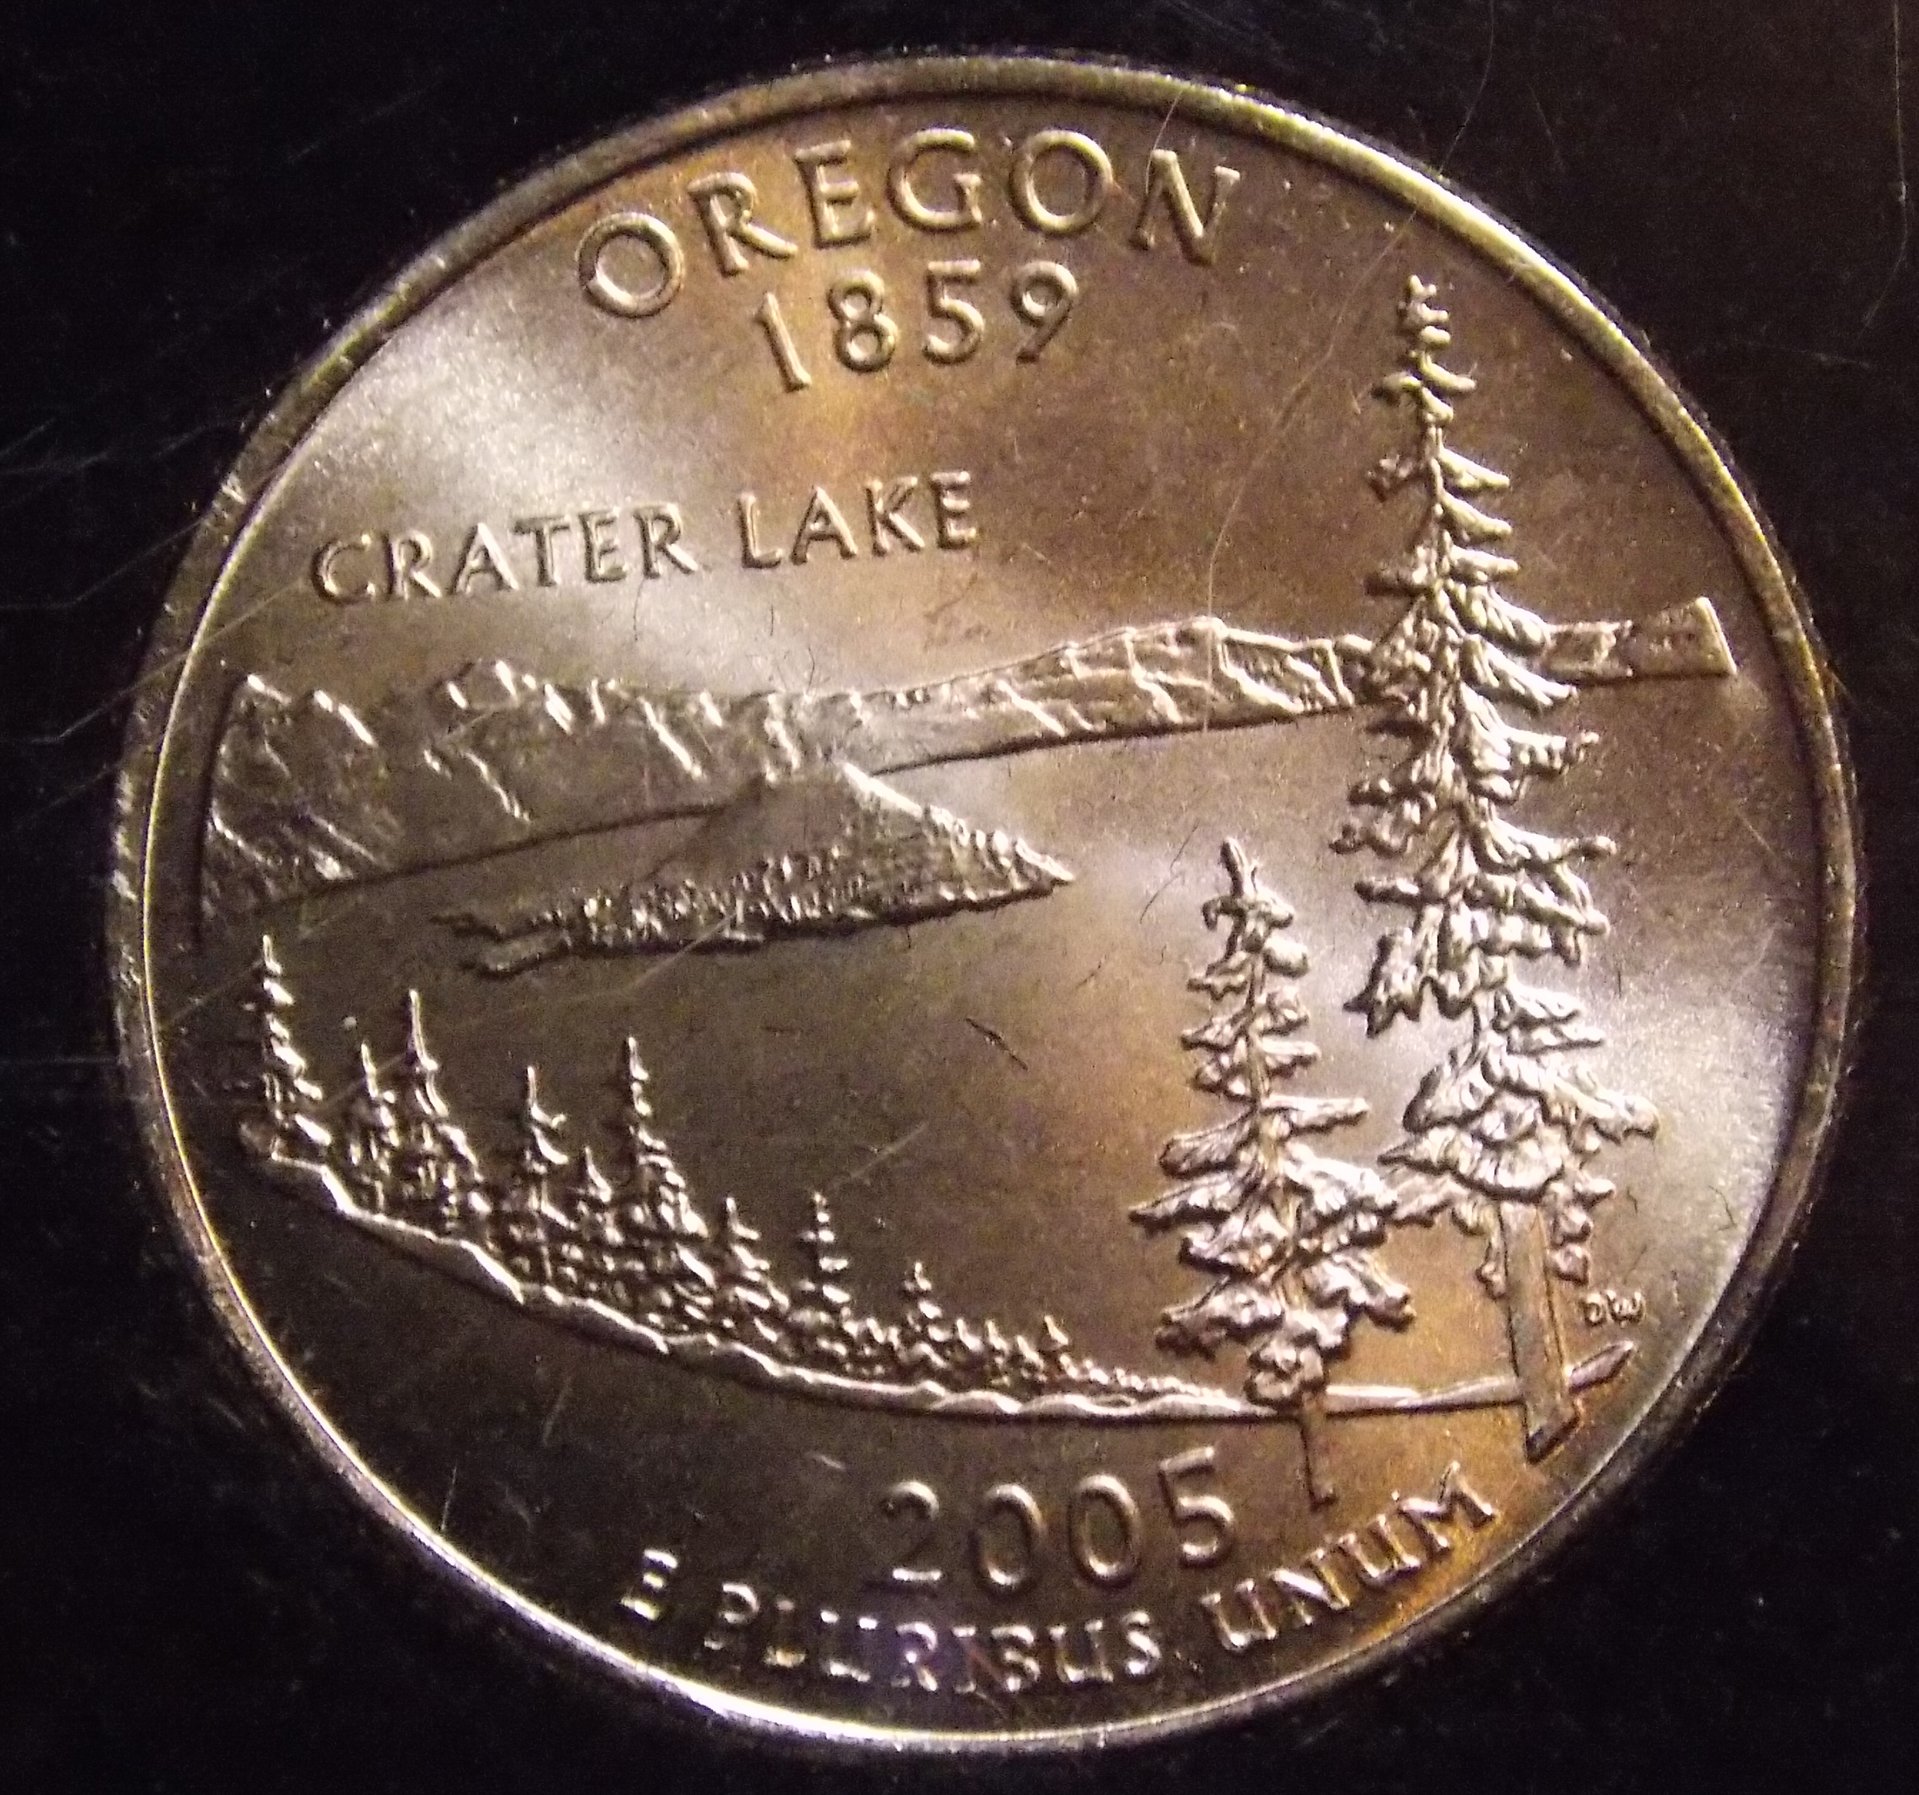 2005 Satin Oregon.jpg